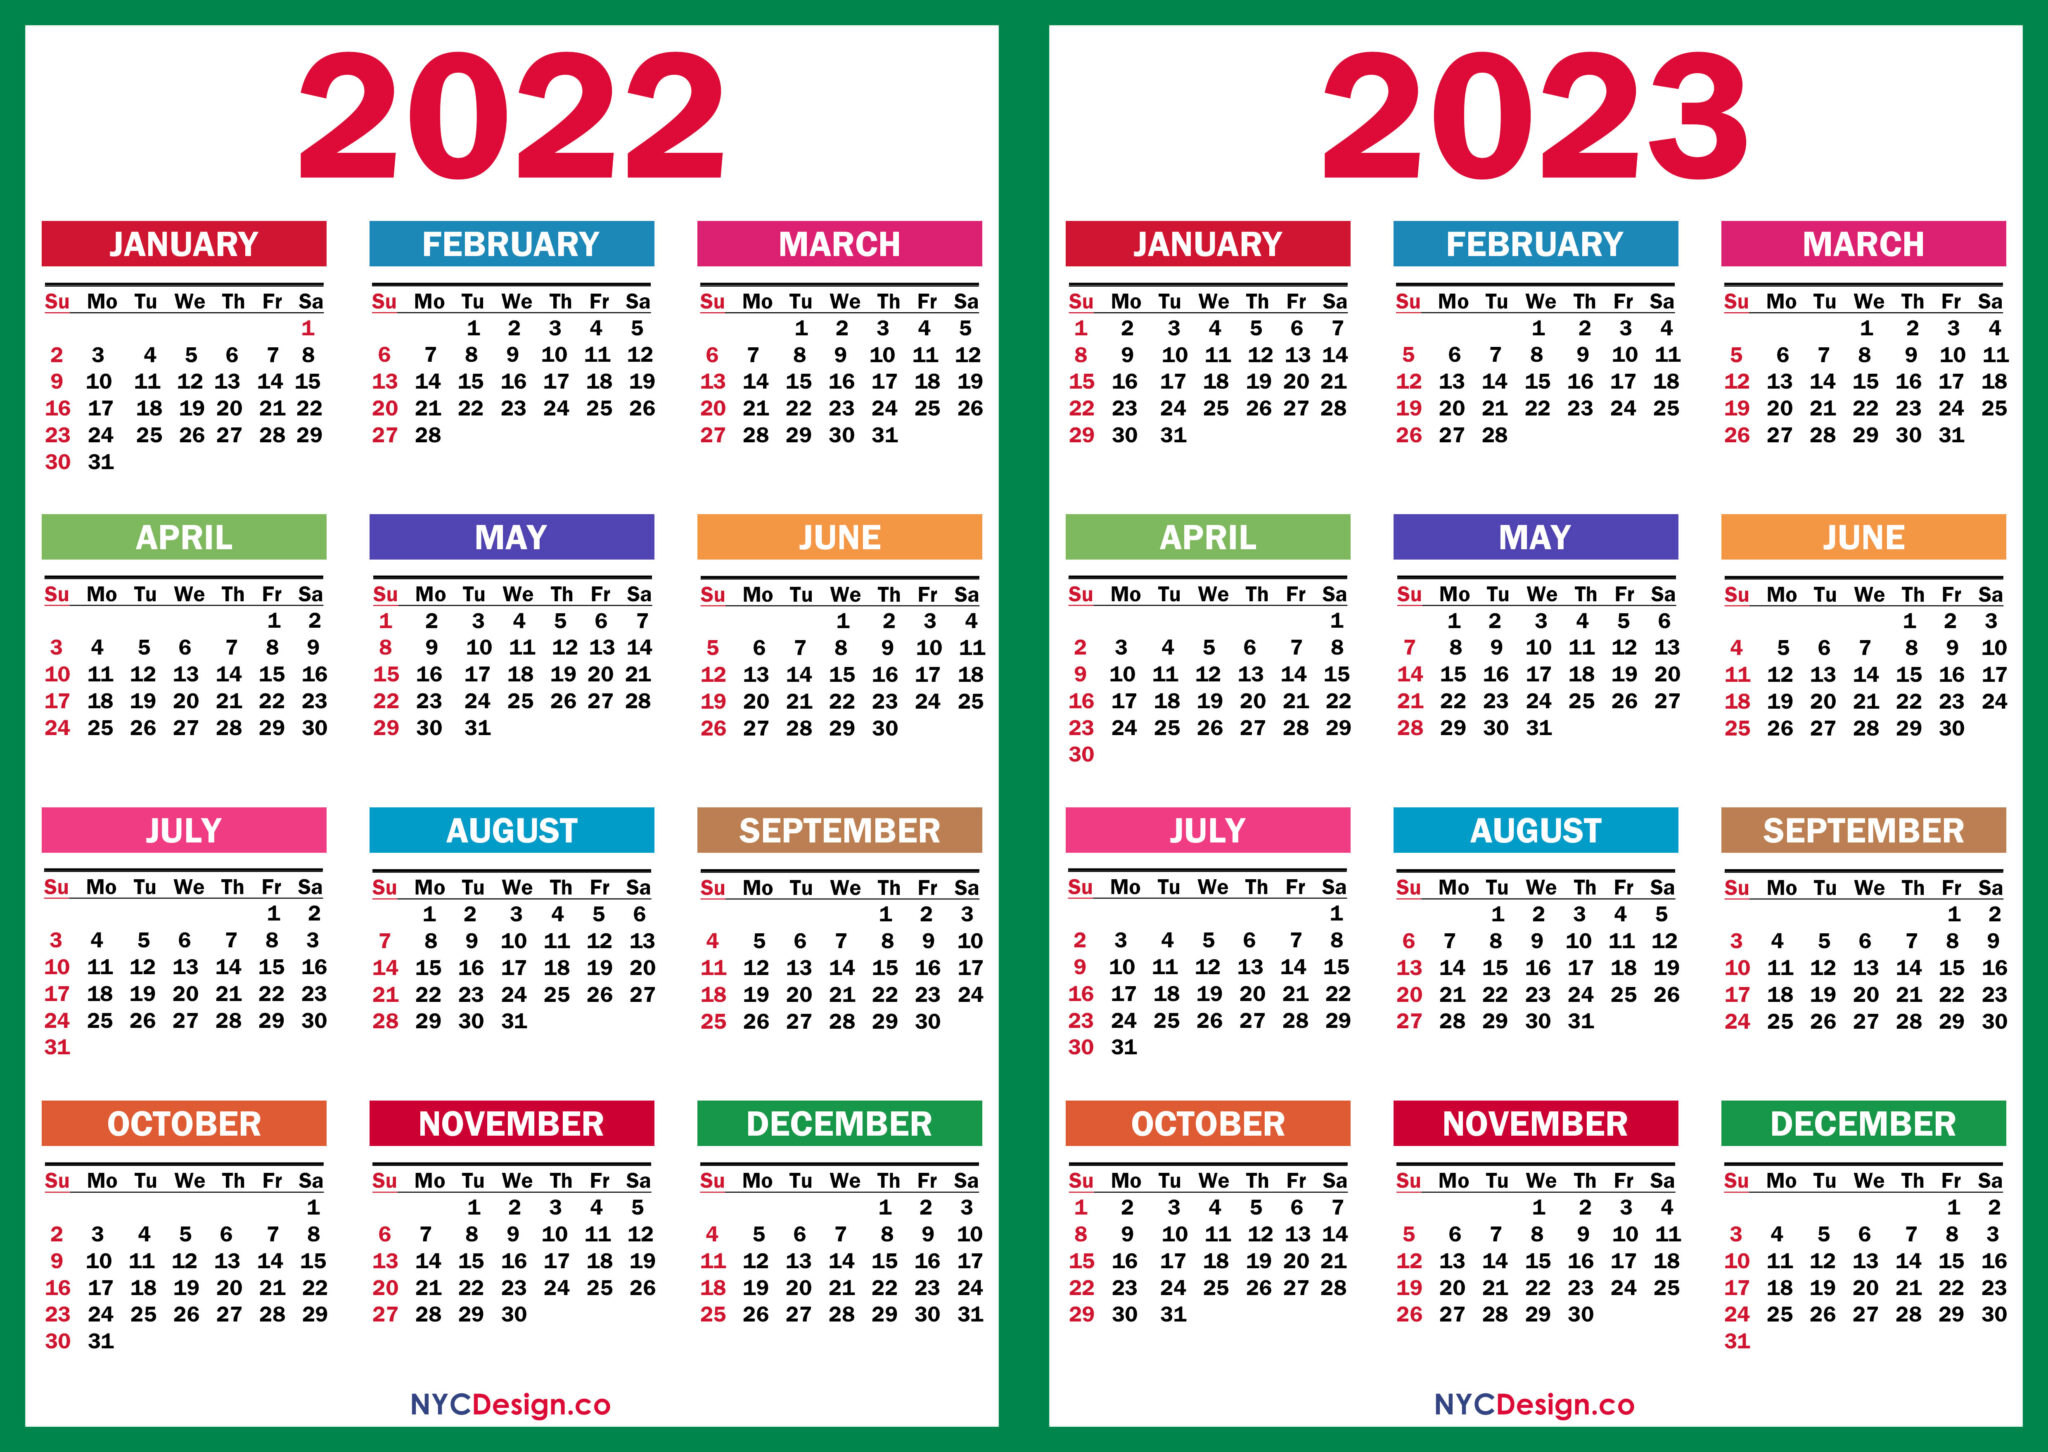 Best 2023 Calendar Free Download 2022 Calendar With Holidays - Riset